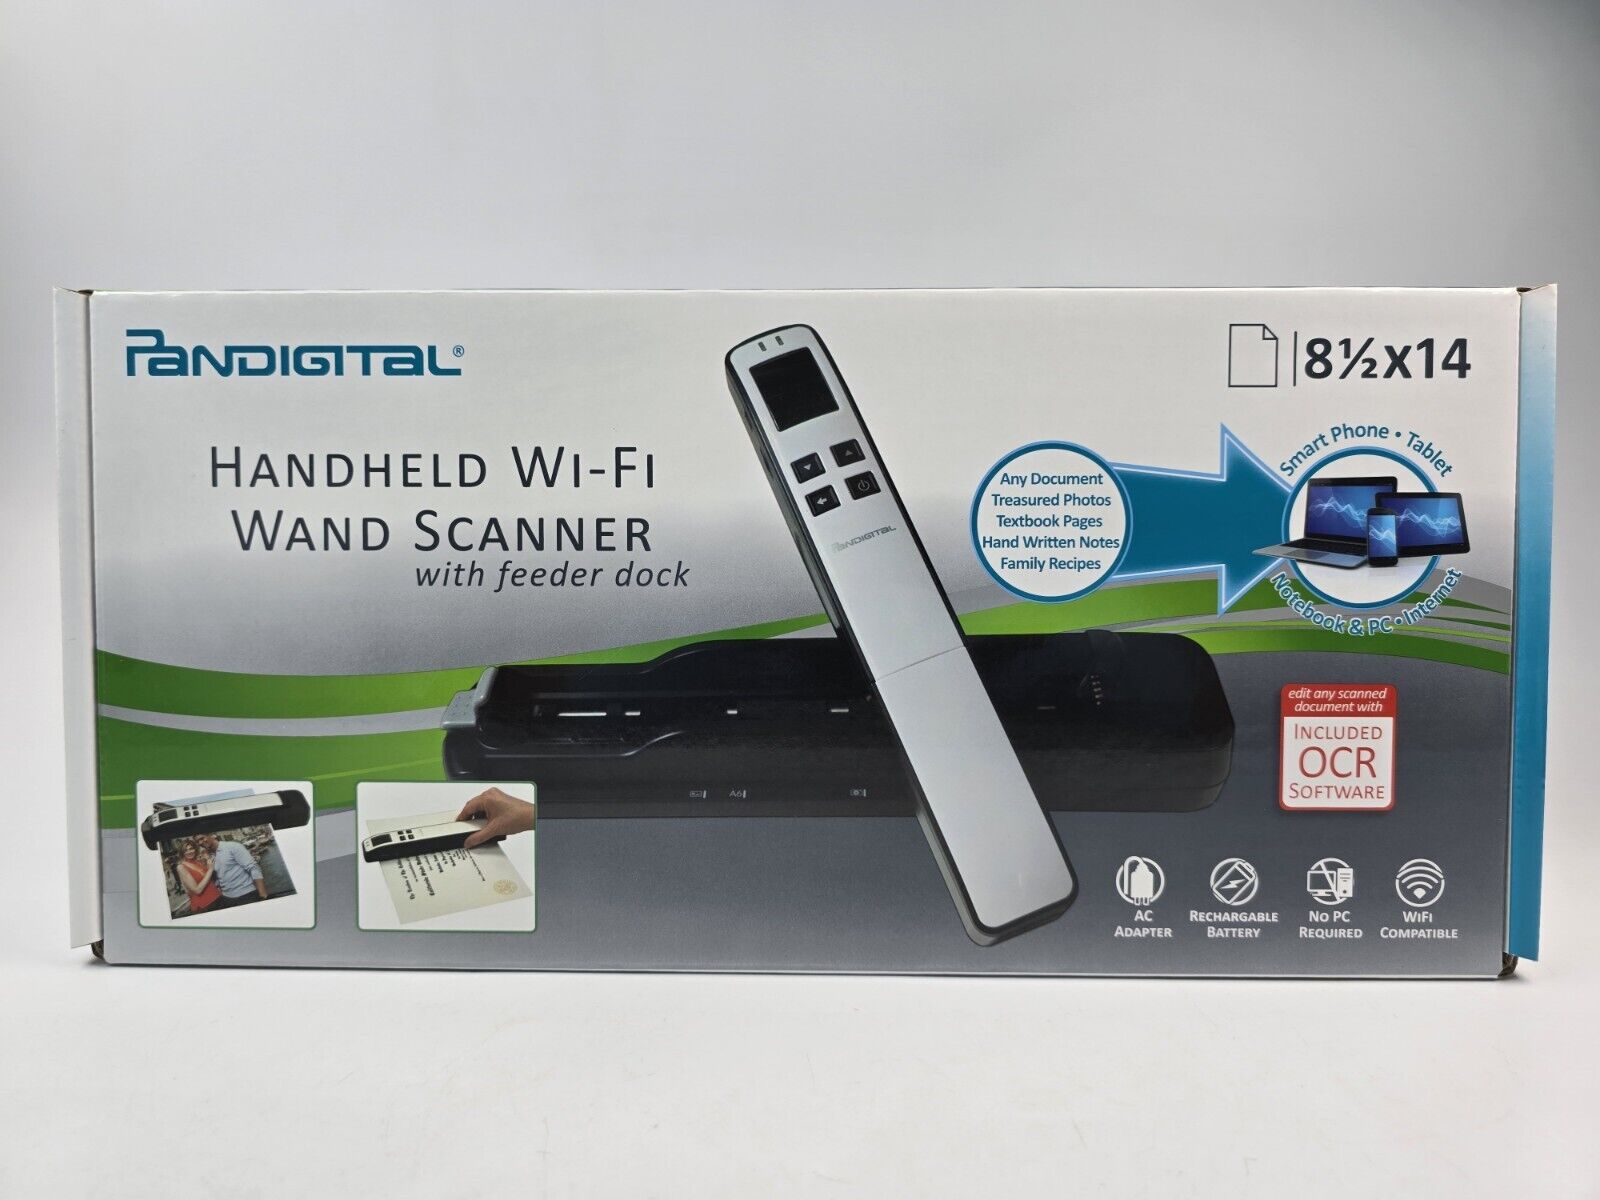 NEW Pandigital Handheld Wi-Fi Wand Scanner S8X1103 w/ Feeder Dock Black 